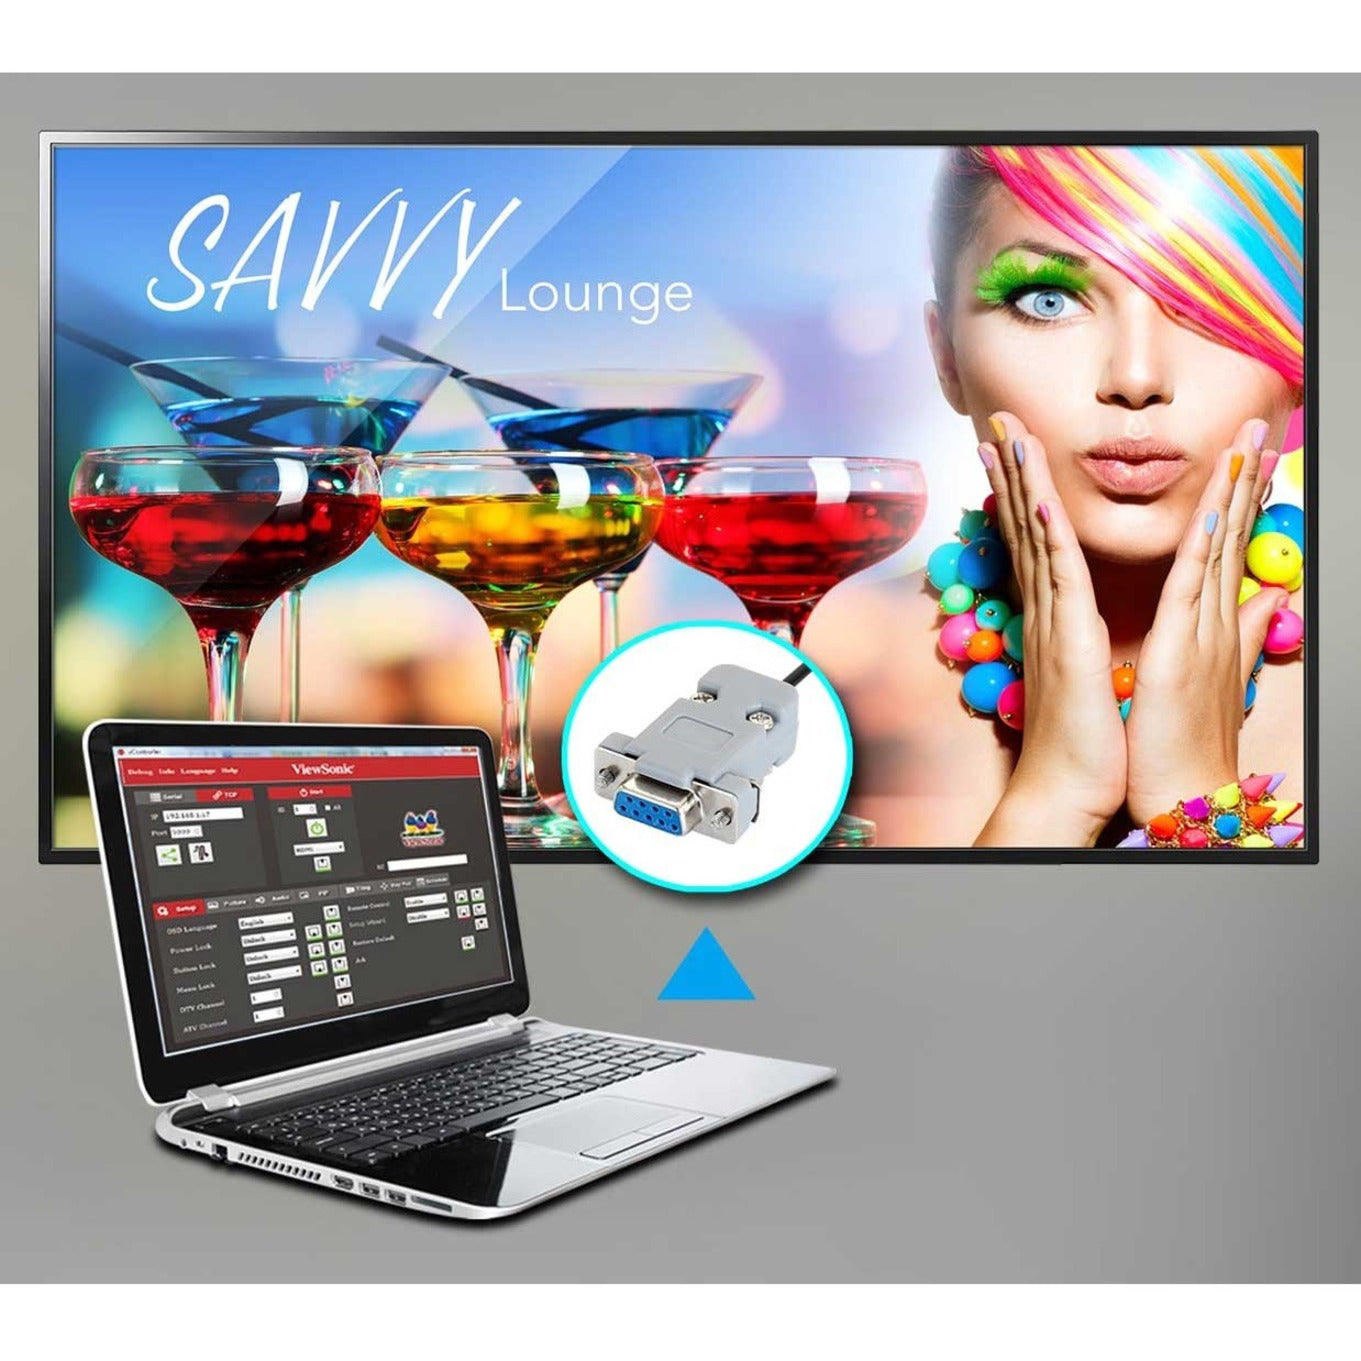 ViewSonic CDE5010 Digital Signage Display, 50" 4K LCD, 350 Nit Brightness, 3 Year Warranty, ENERGY STAR 7.0